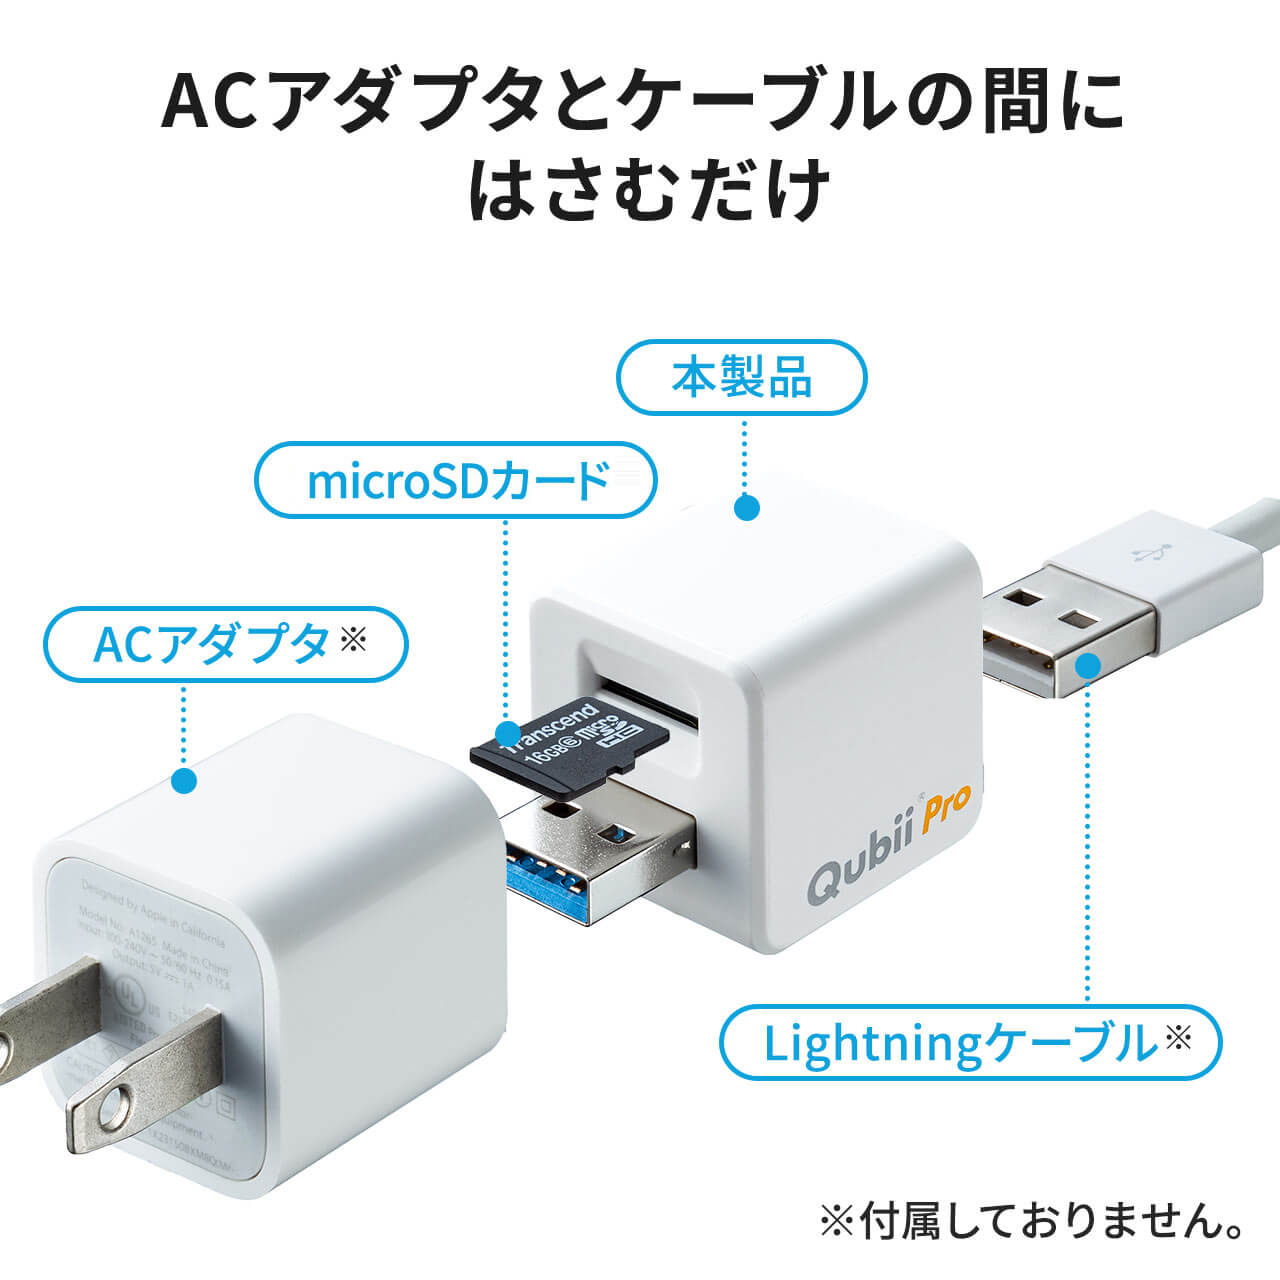 iPhone バックアップ 自動 Qubii Pro iPhone カードリーダー データ保存 microSDカード付属 iPad 充電 USB3.1 Gen1 512GB TS512GUSD300S-A 402-ADRIP011512